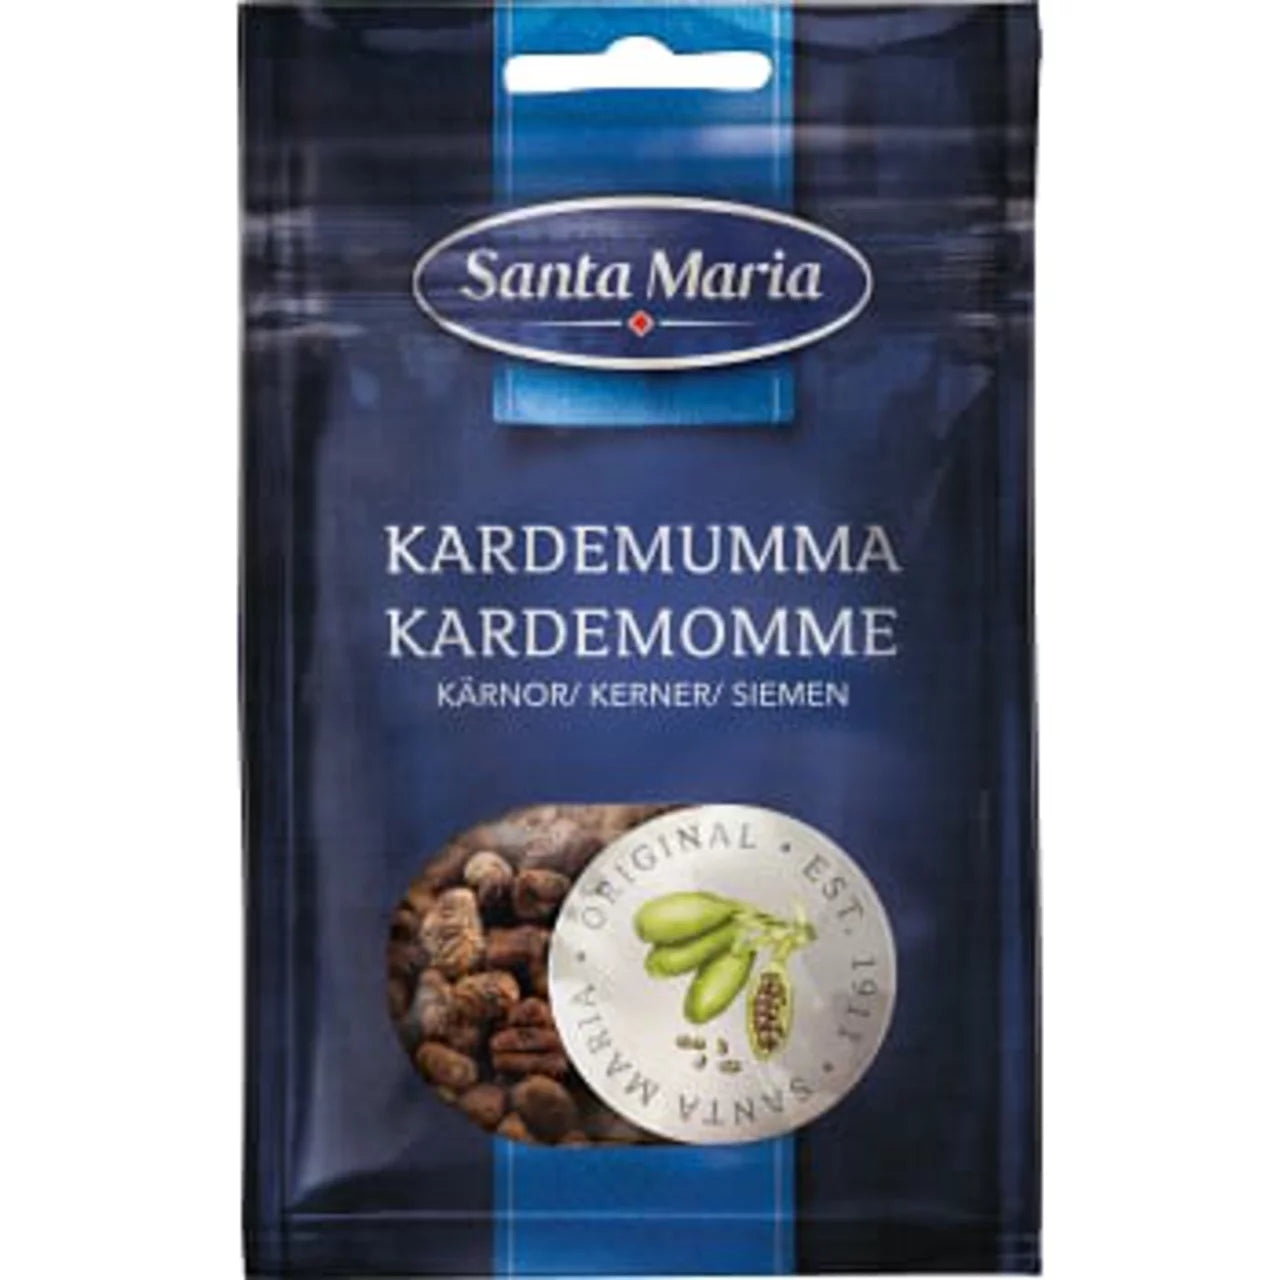 Swedish Cardamom - Kardemumma Kärnor Santa Maria 21g